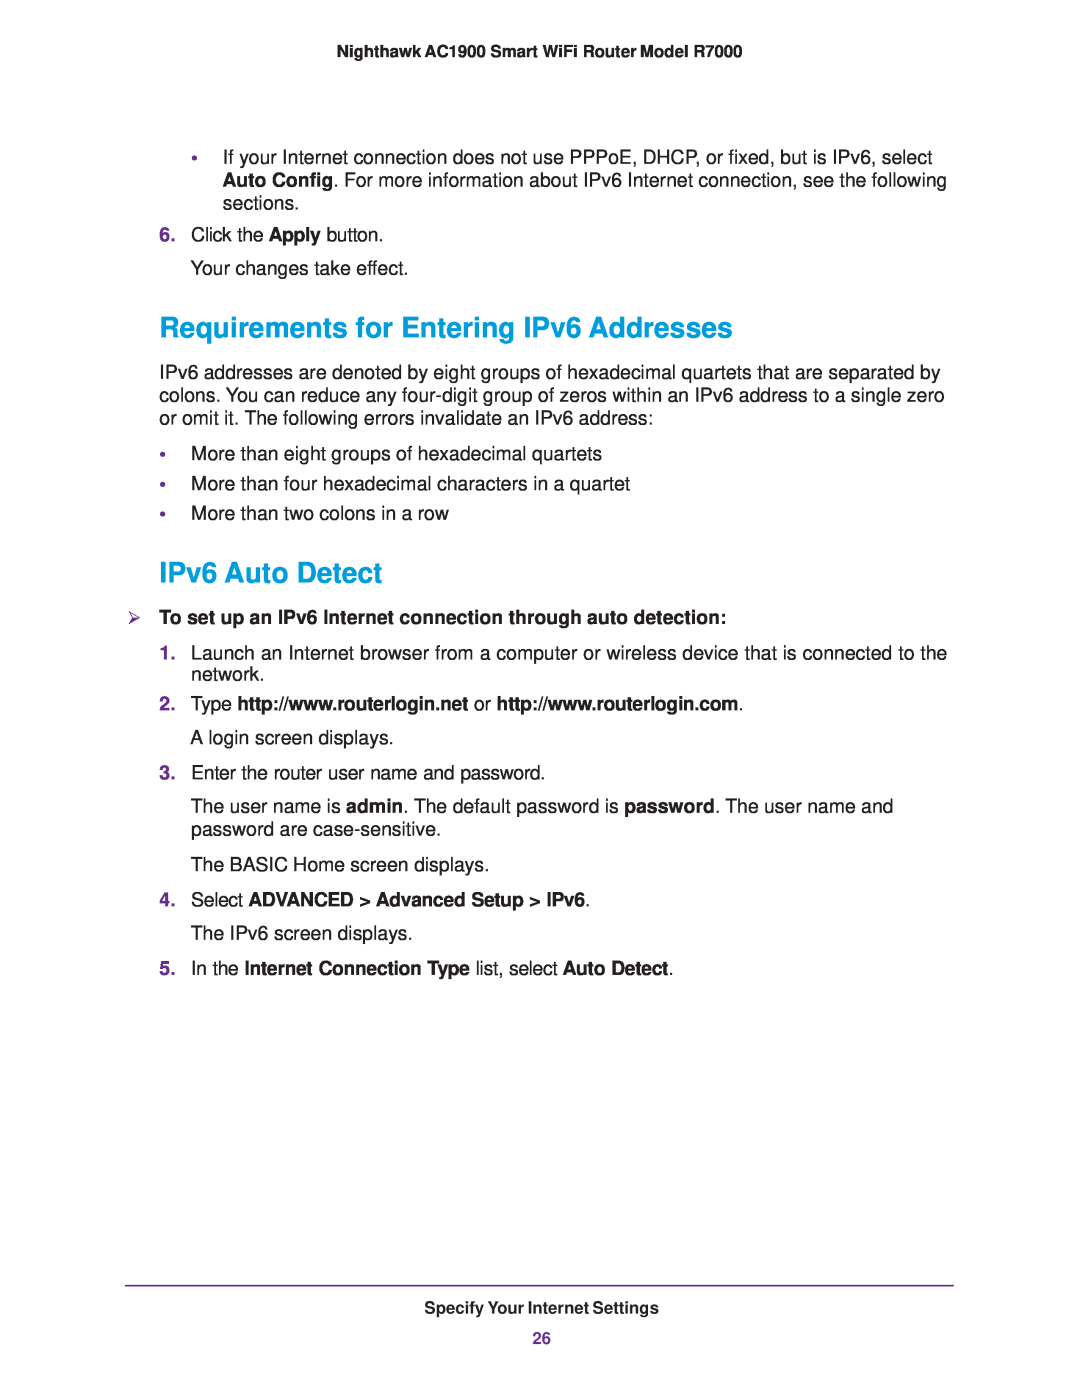 NETGEAR R7000 user manual Requirements for Entering IPv6 Addresses, IPv6 Auto Detect 